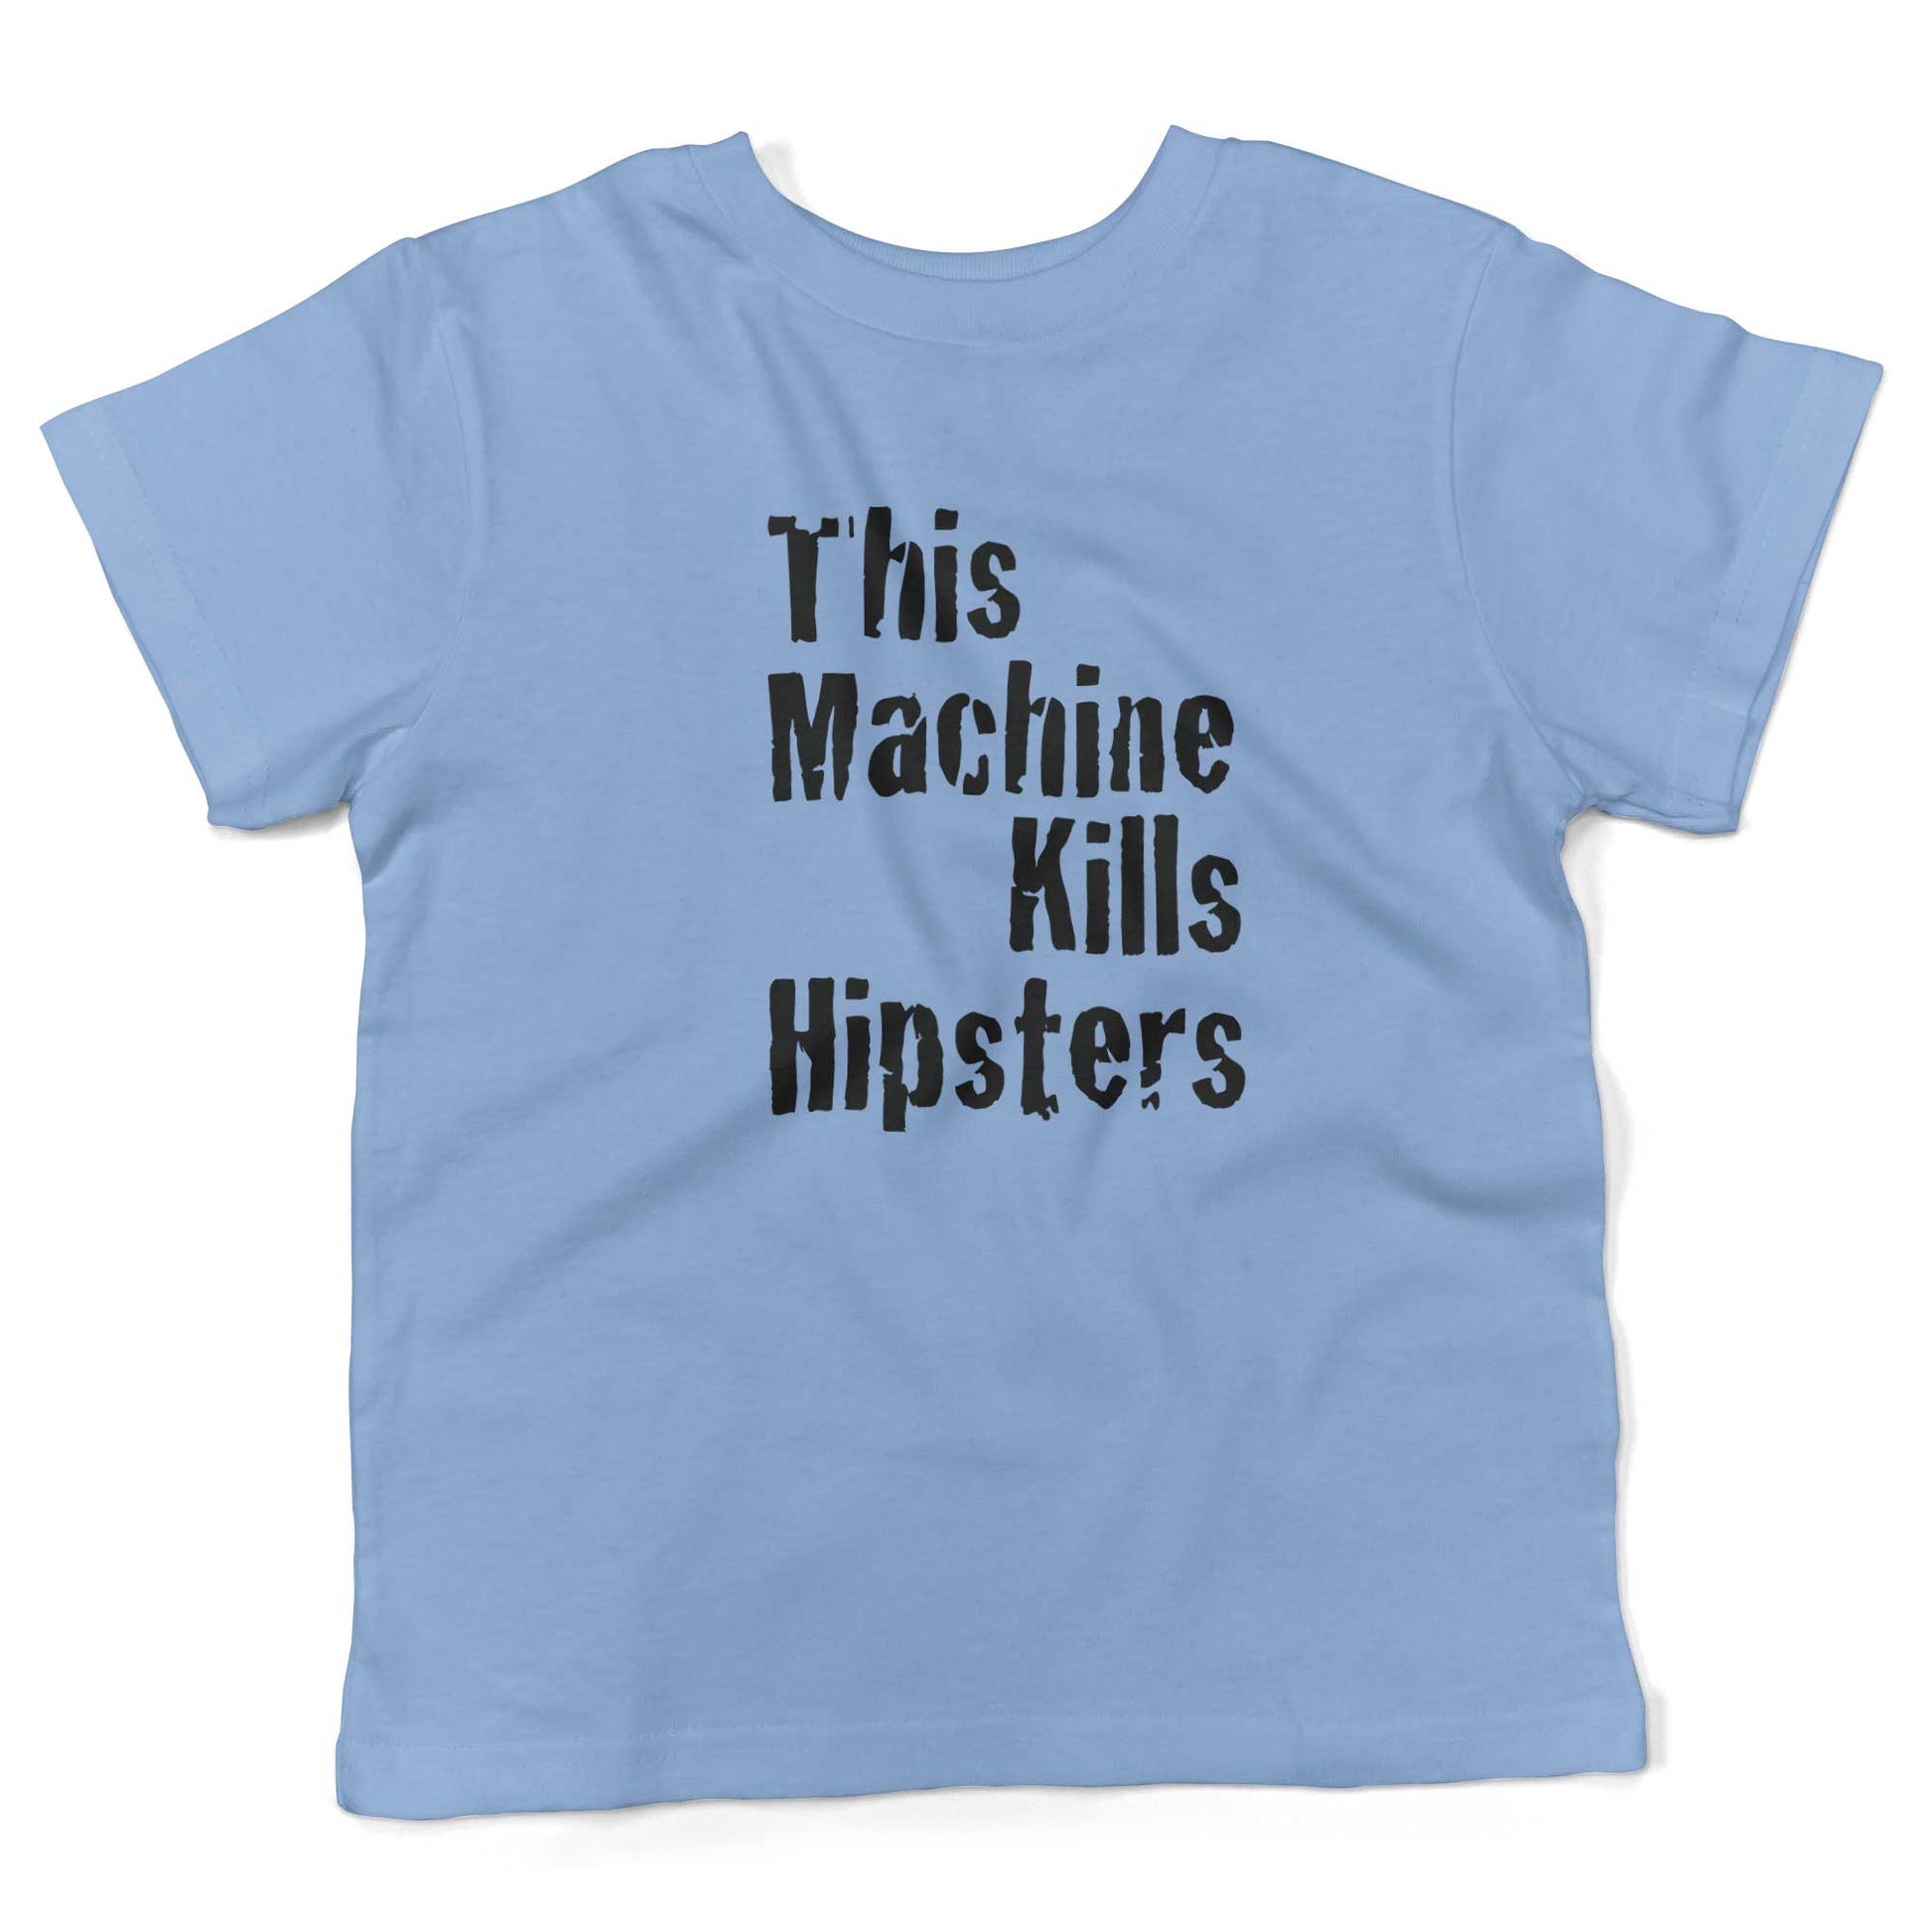 This Machine Kills Hipsters Toddler Shirt-Organic Baby Blue-2T